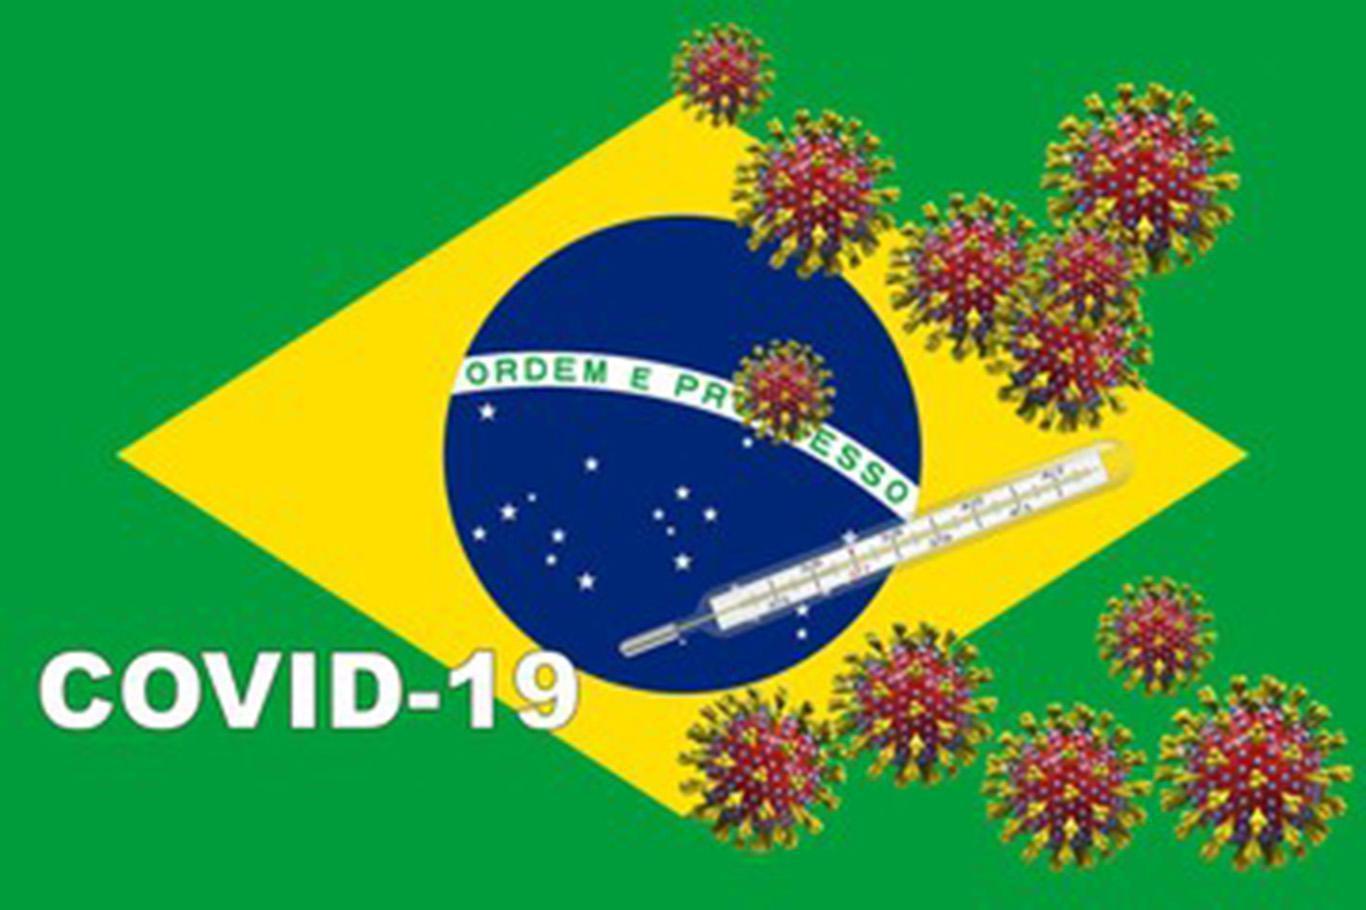 Brazil: The number of coronavirus cases reaches 1,804,338